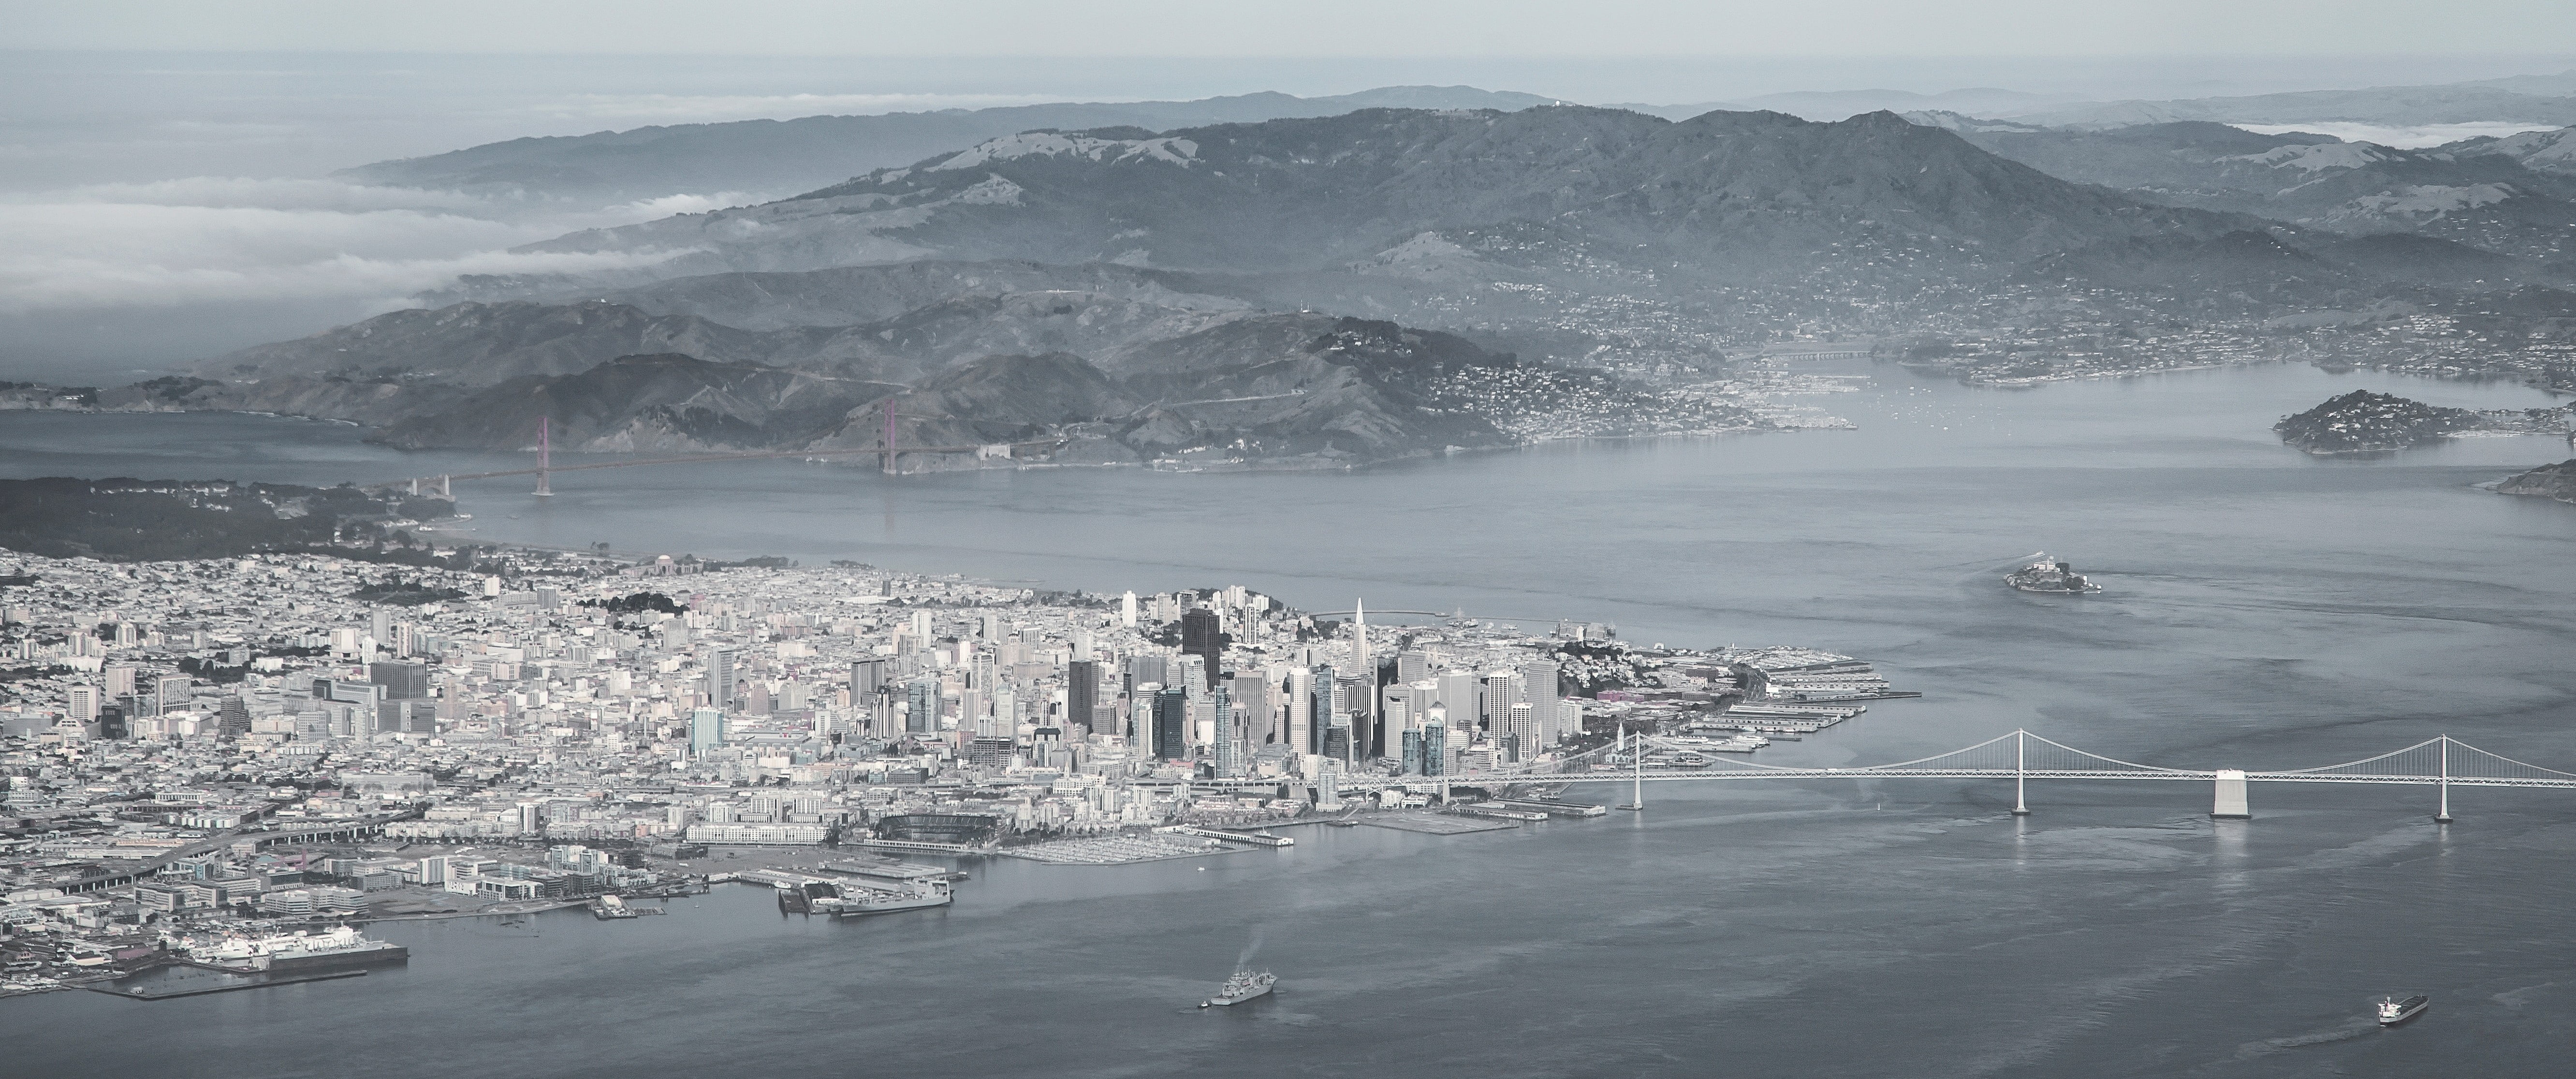 grayscale photo of city buildings, San Francisco, monochrome, cityscape, landscape